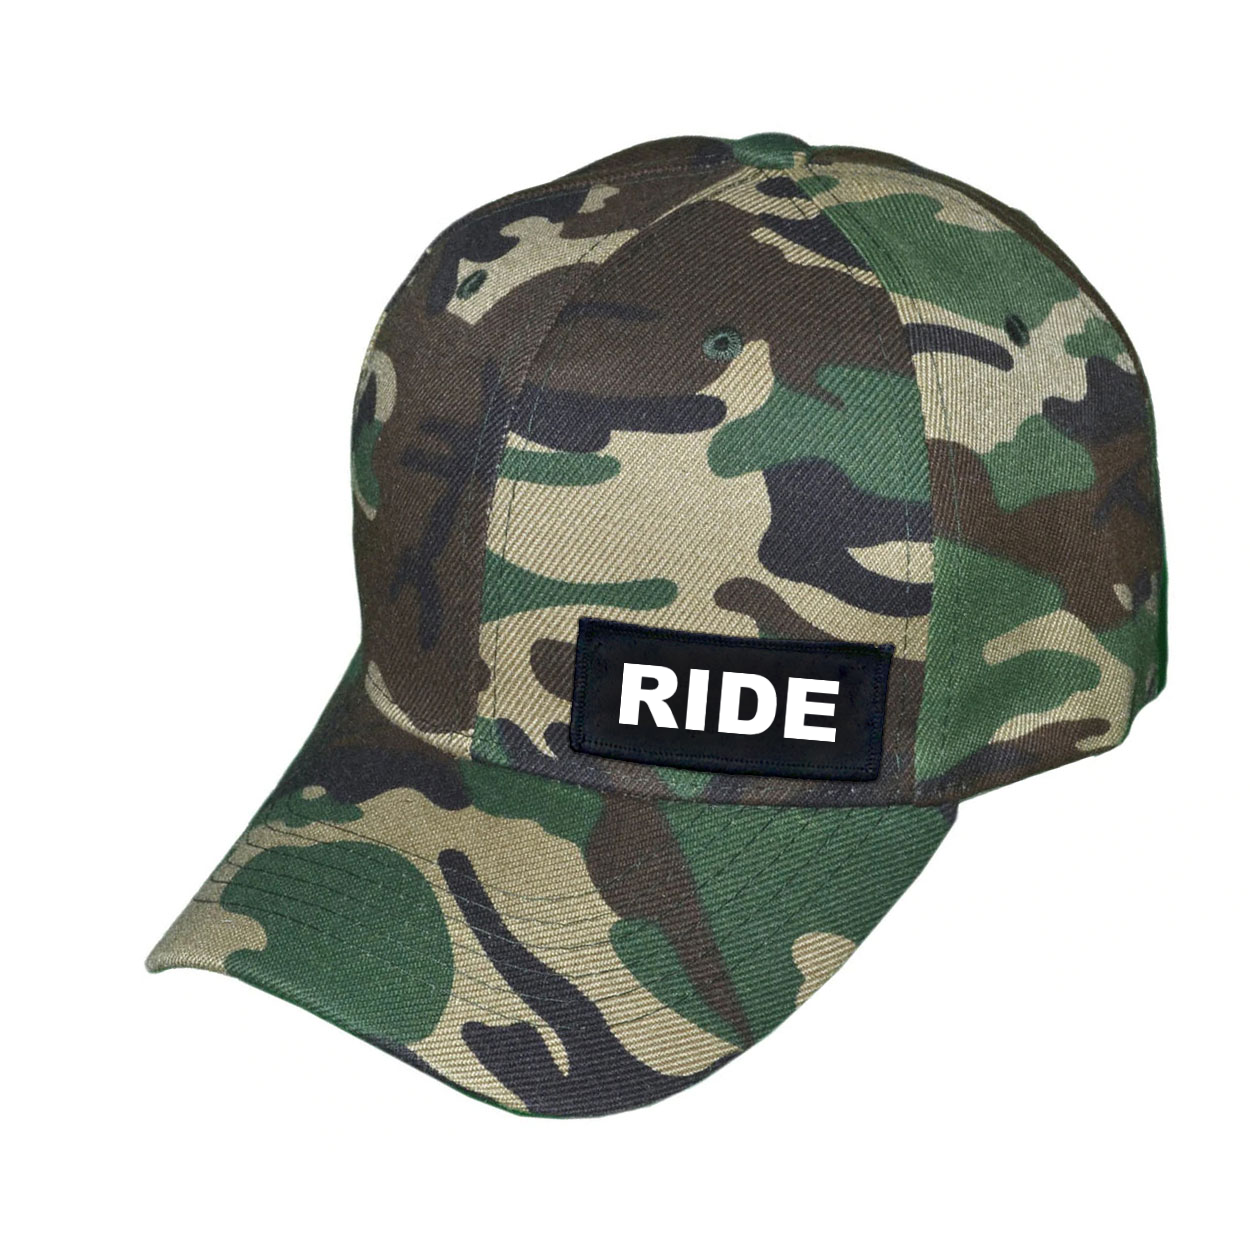 Ride Brand Logo Night Out Woven Patch Velcro Baseball Cap Hat Camo